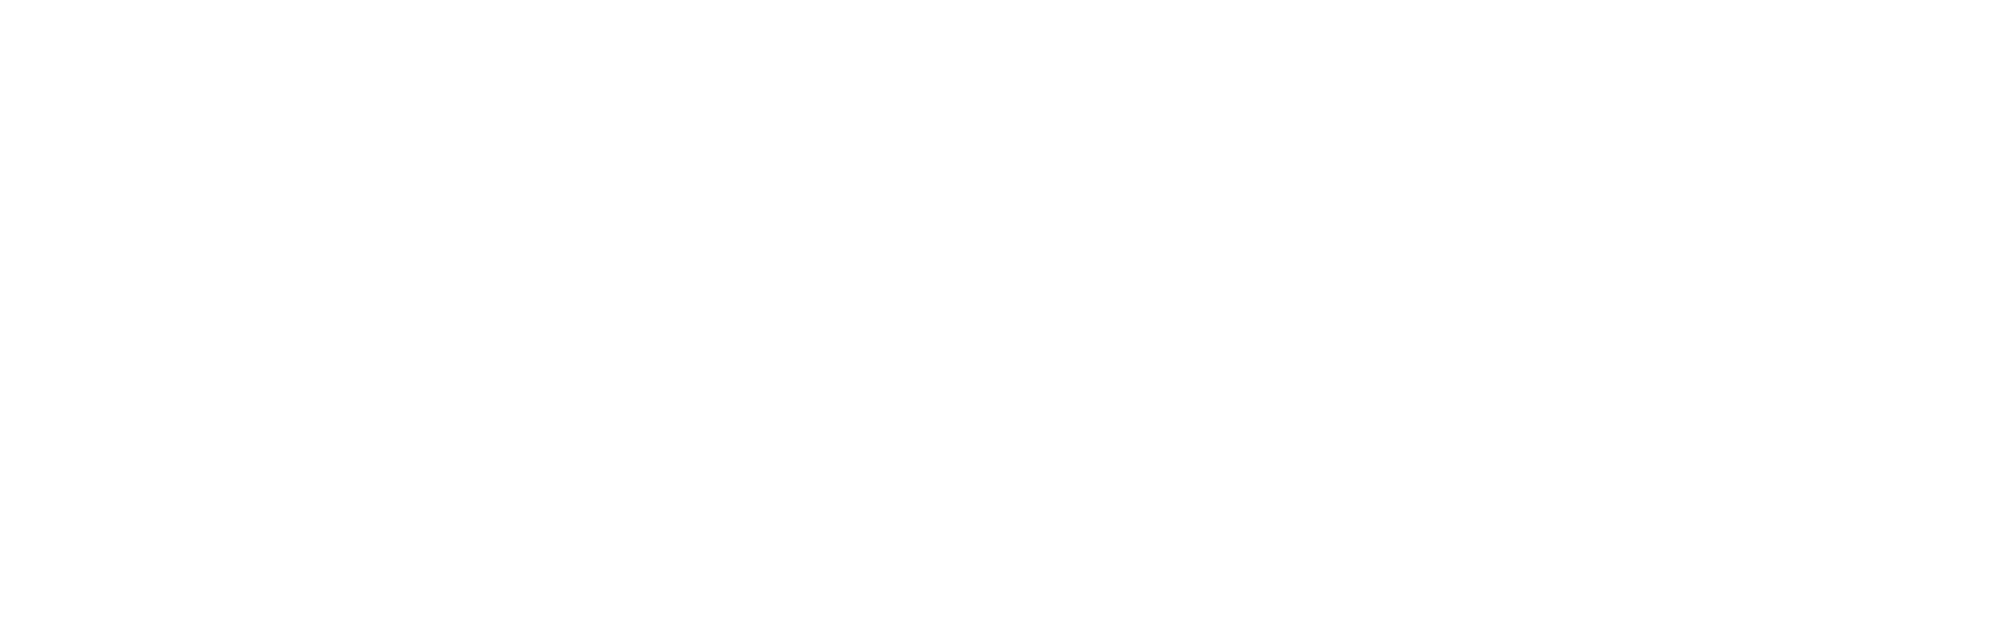 Franchise Strategy Co.